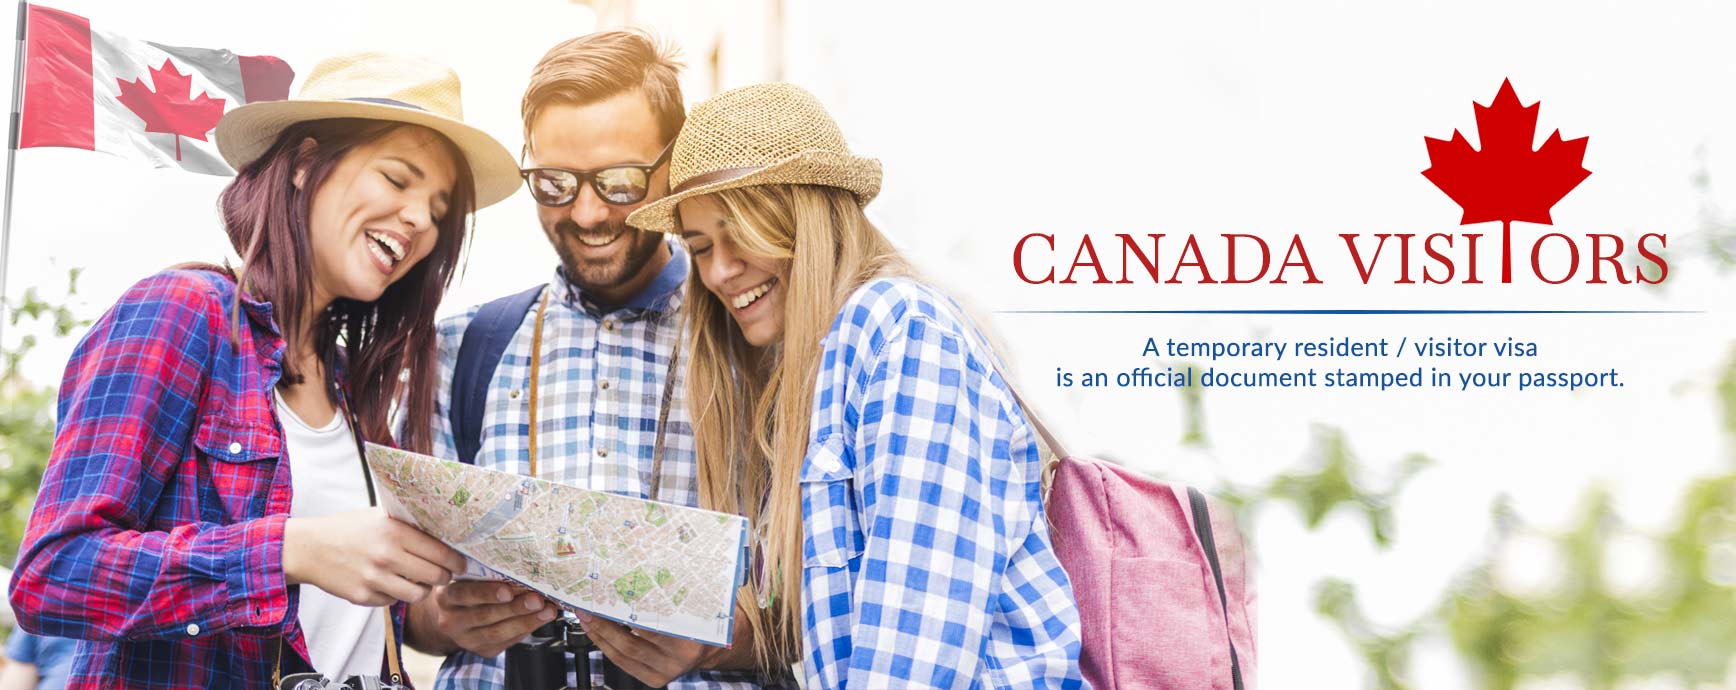 Get Resident Visitor Visa For Canada